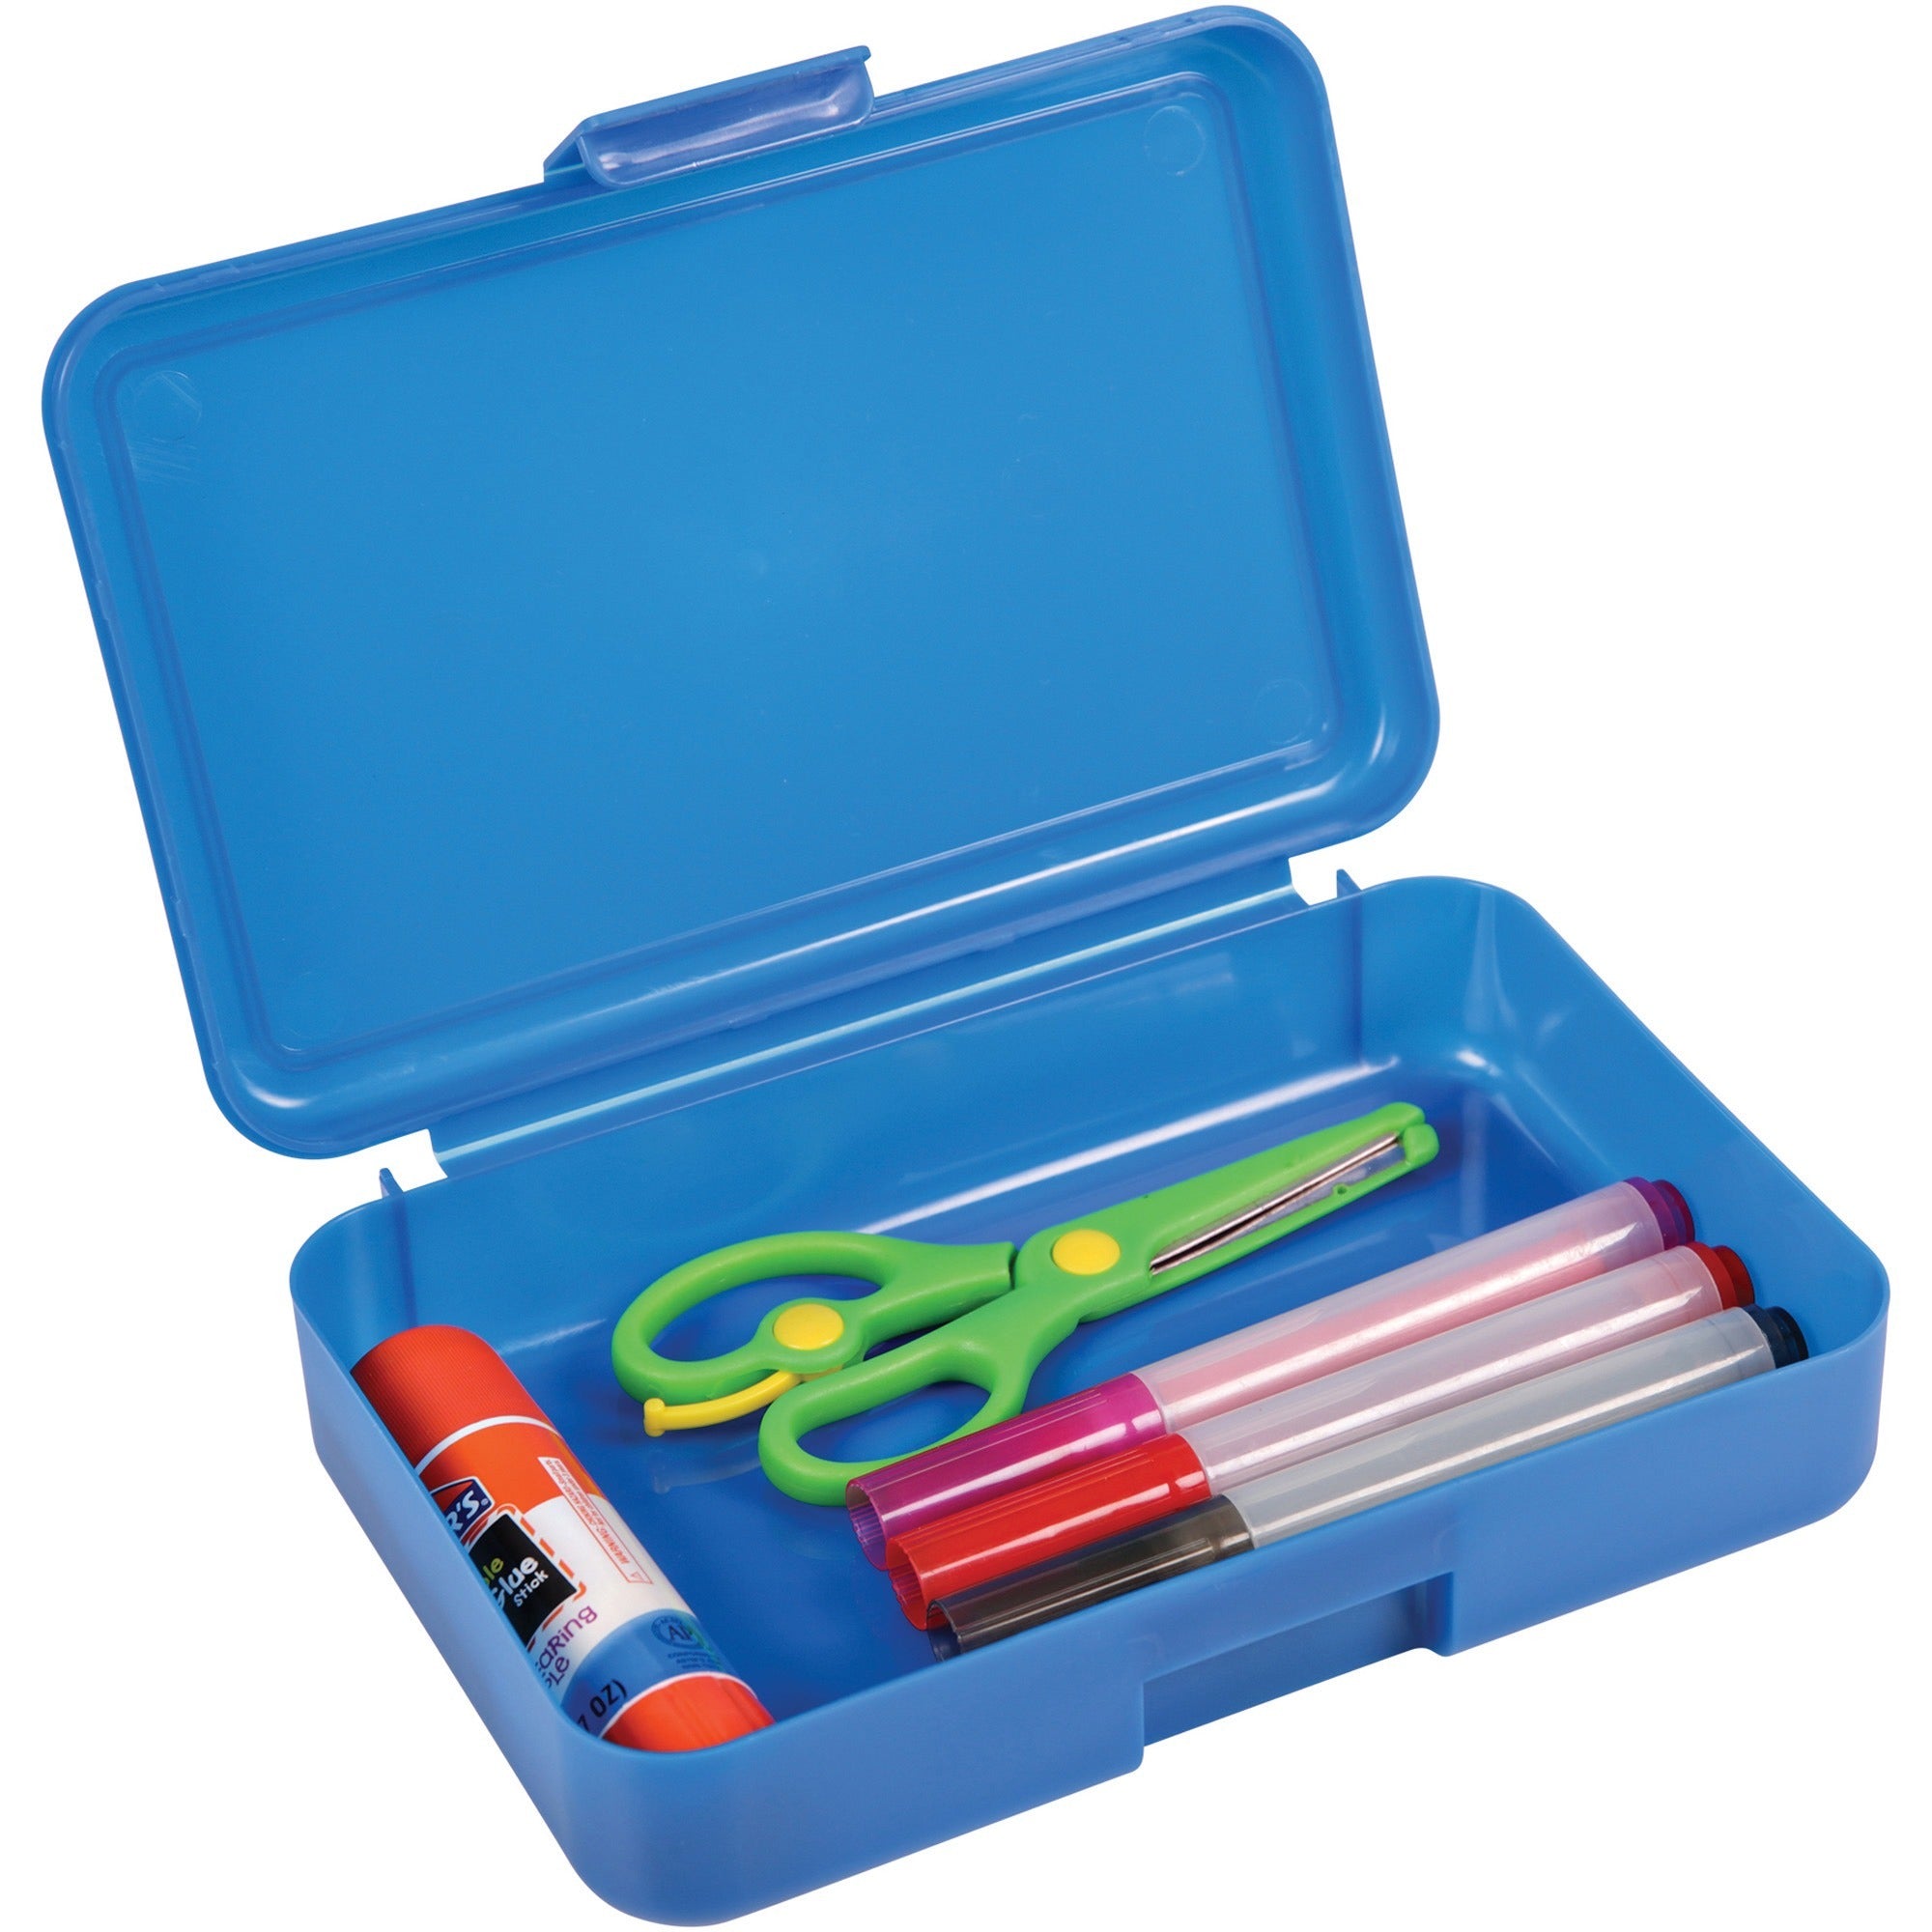 deflecto-antimicrobial-pencil-box-blue-external-dimensions-54-width-x-8-depth-x-2-height-snap-closure-plastic-blue-for-pencil-marker-supplies_def39504blu - 1